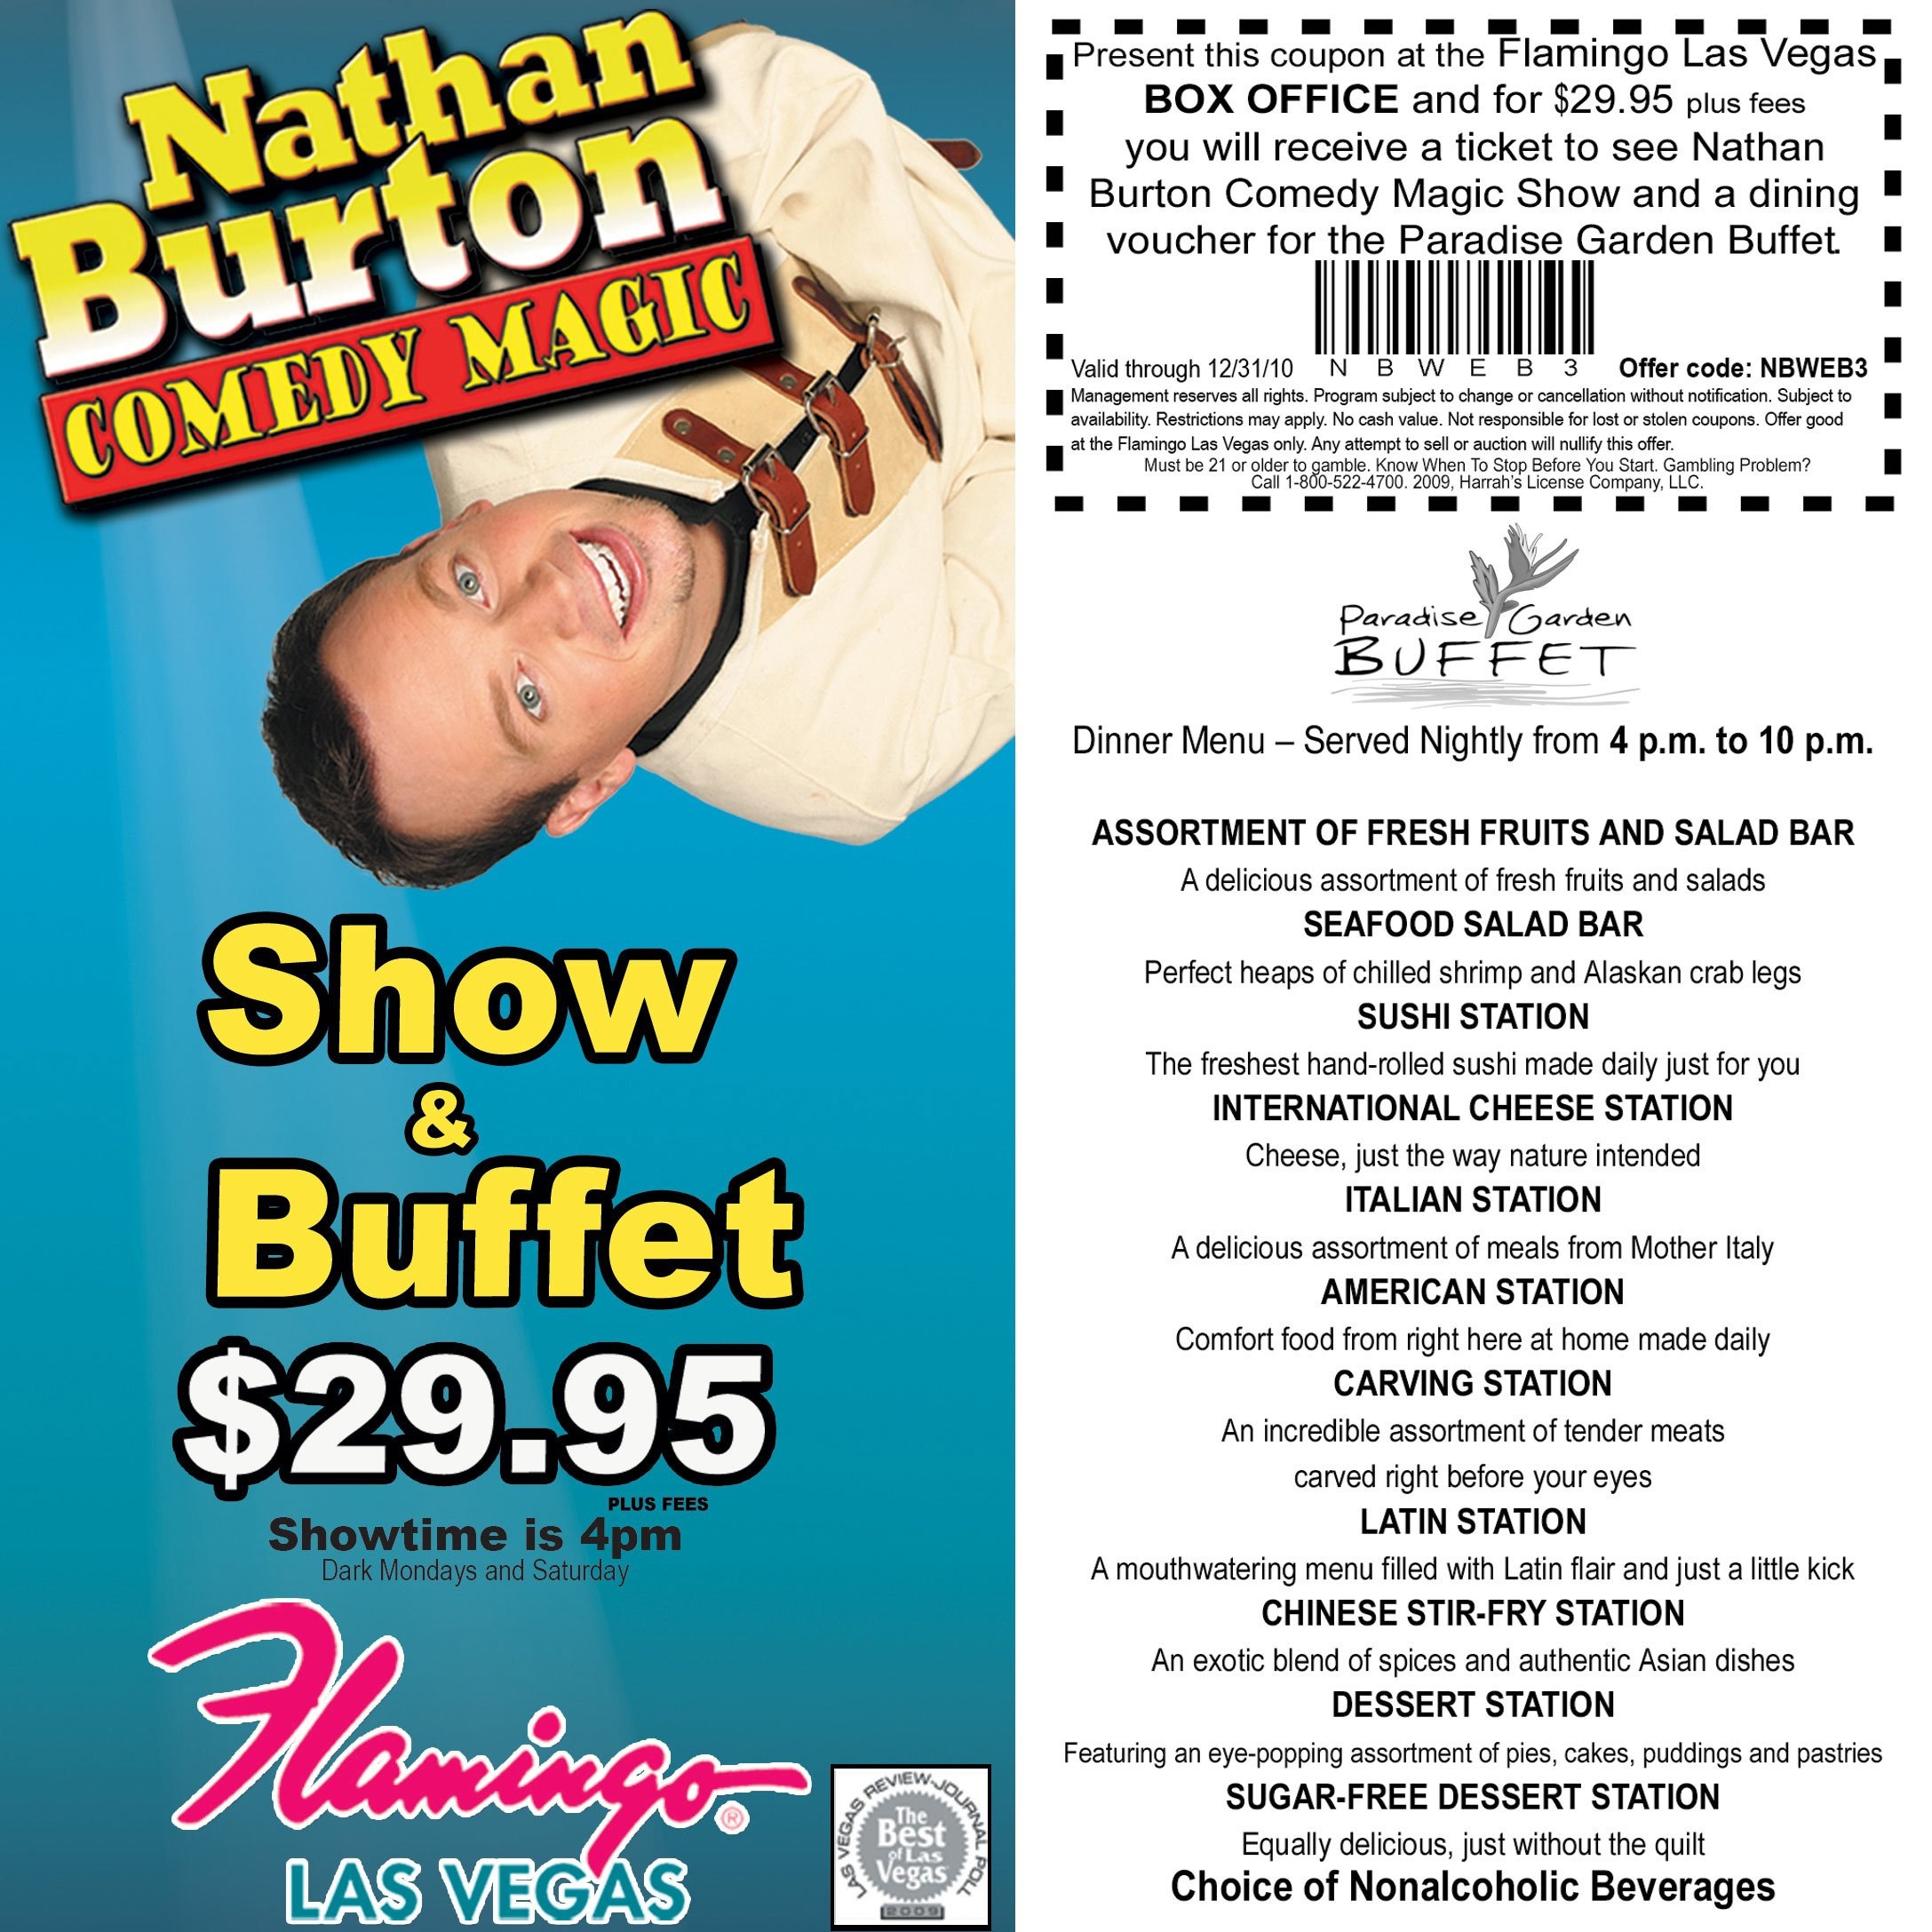 Jubilee Show Tickets 2 For 1 Las Vegas Coupon At Ballys Sweet - Free Printable Las Vegas Coupons 2014